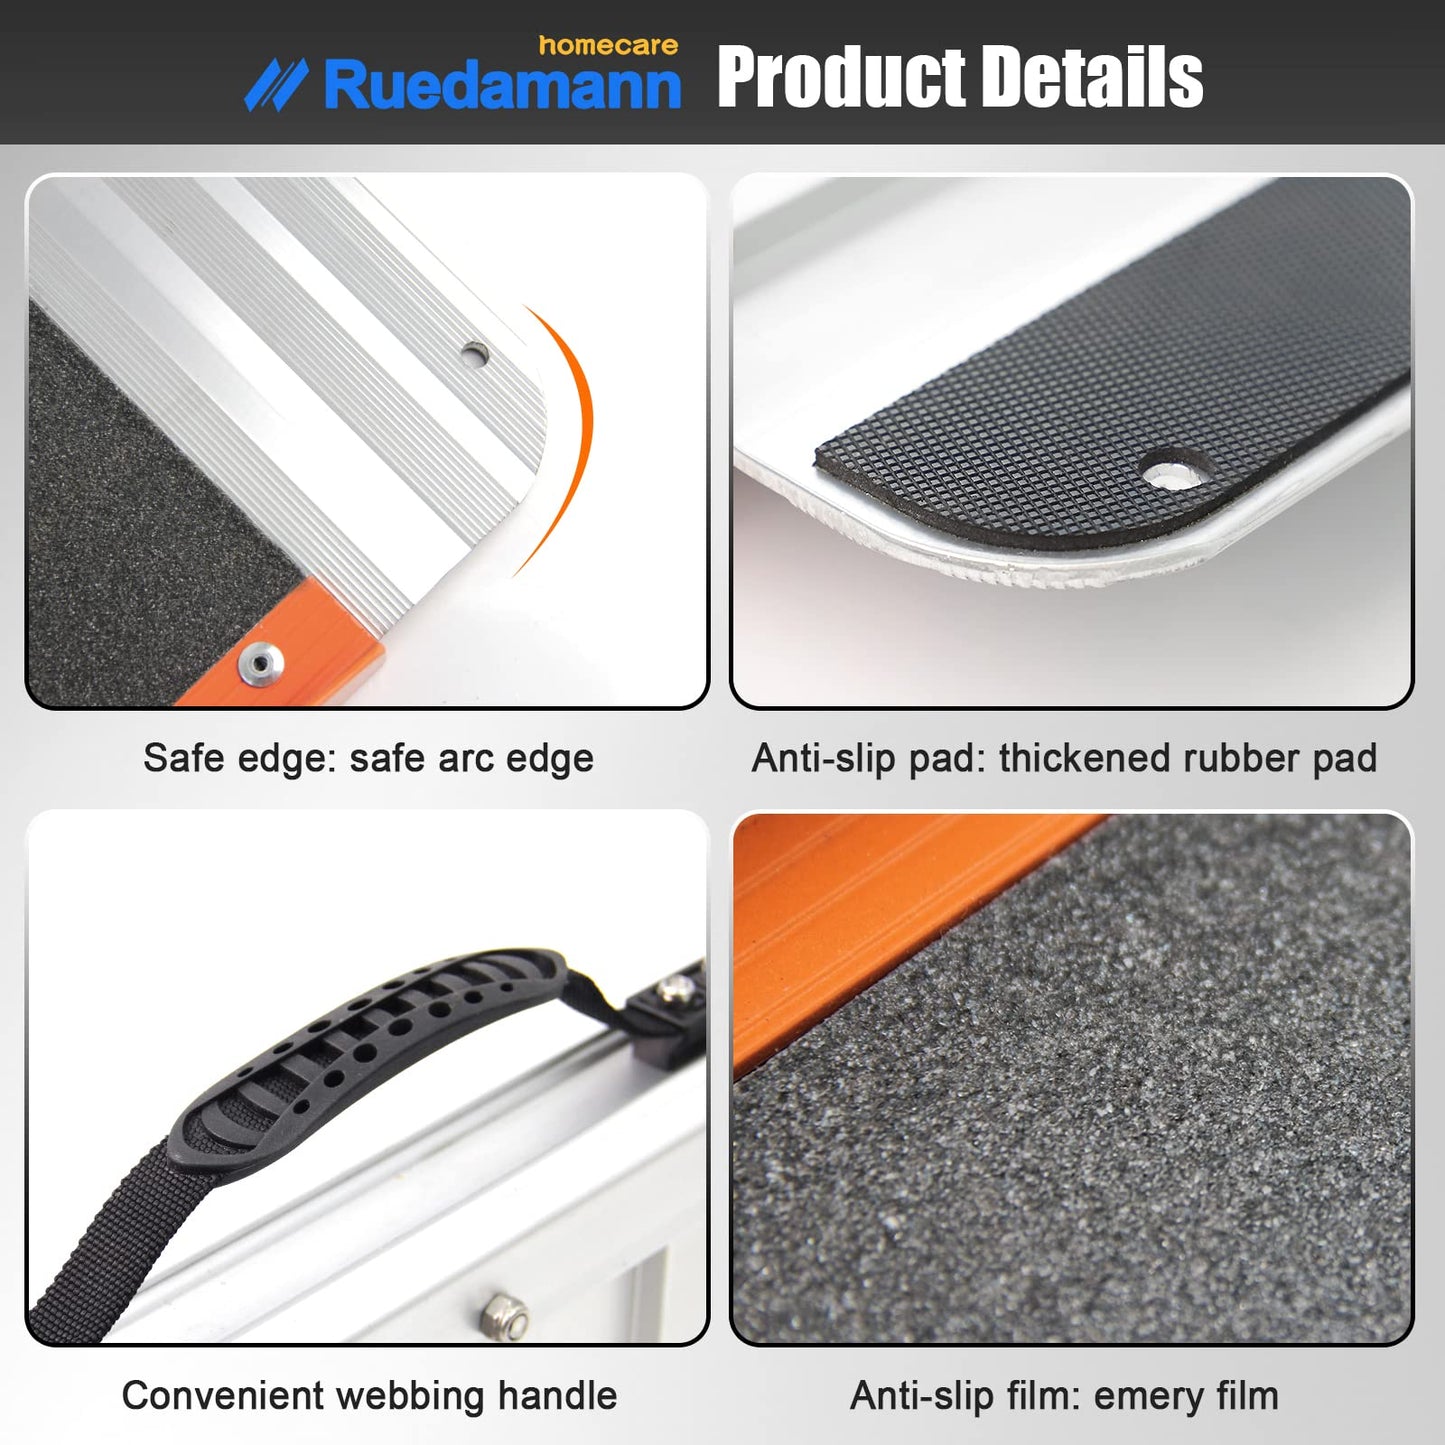 Ruedamann® Folding Wheelchair Ramp with Non-Skid Surface Aluminum